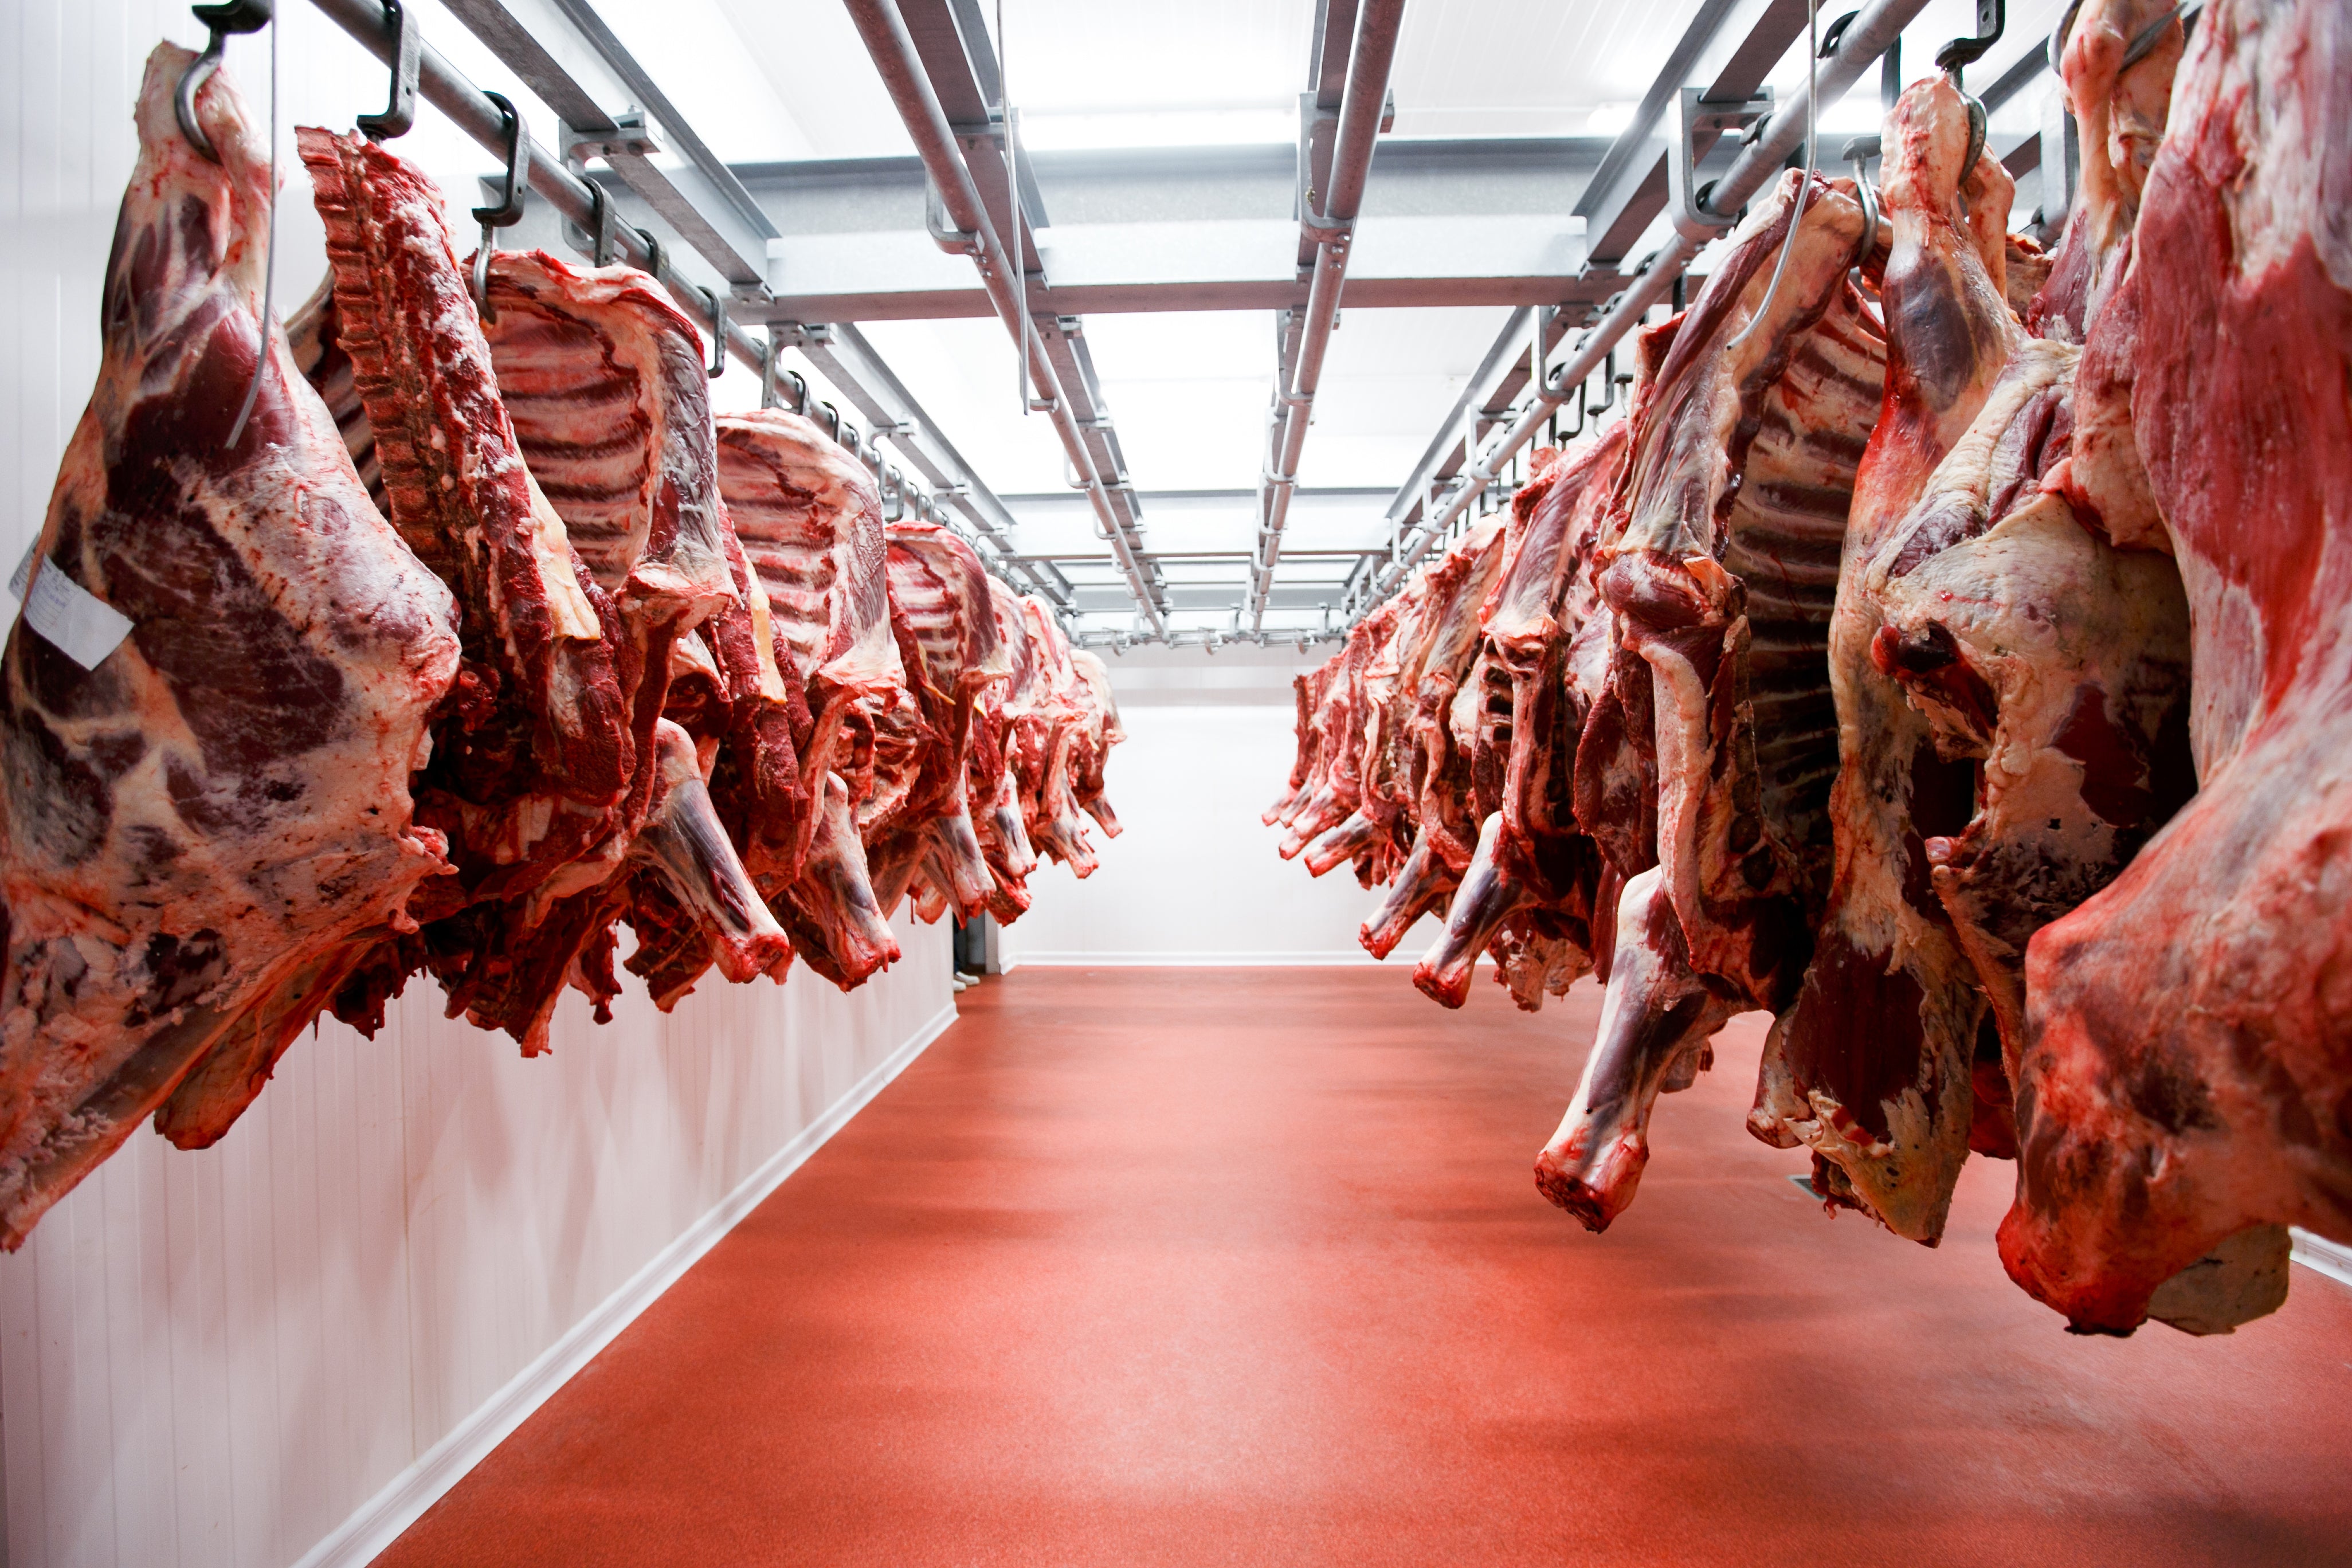 Meat Cutting Facilities - Meatworld International, Inc.